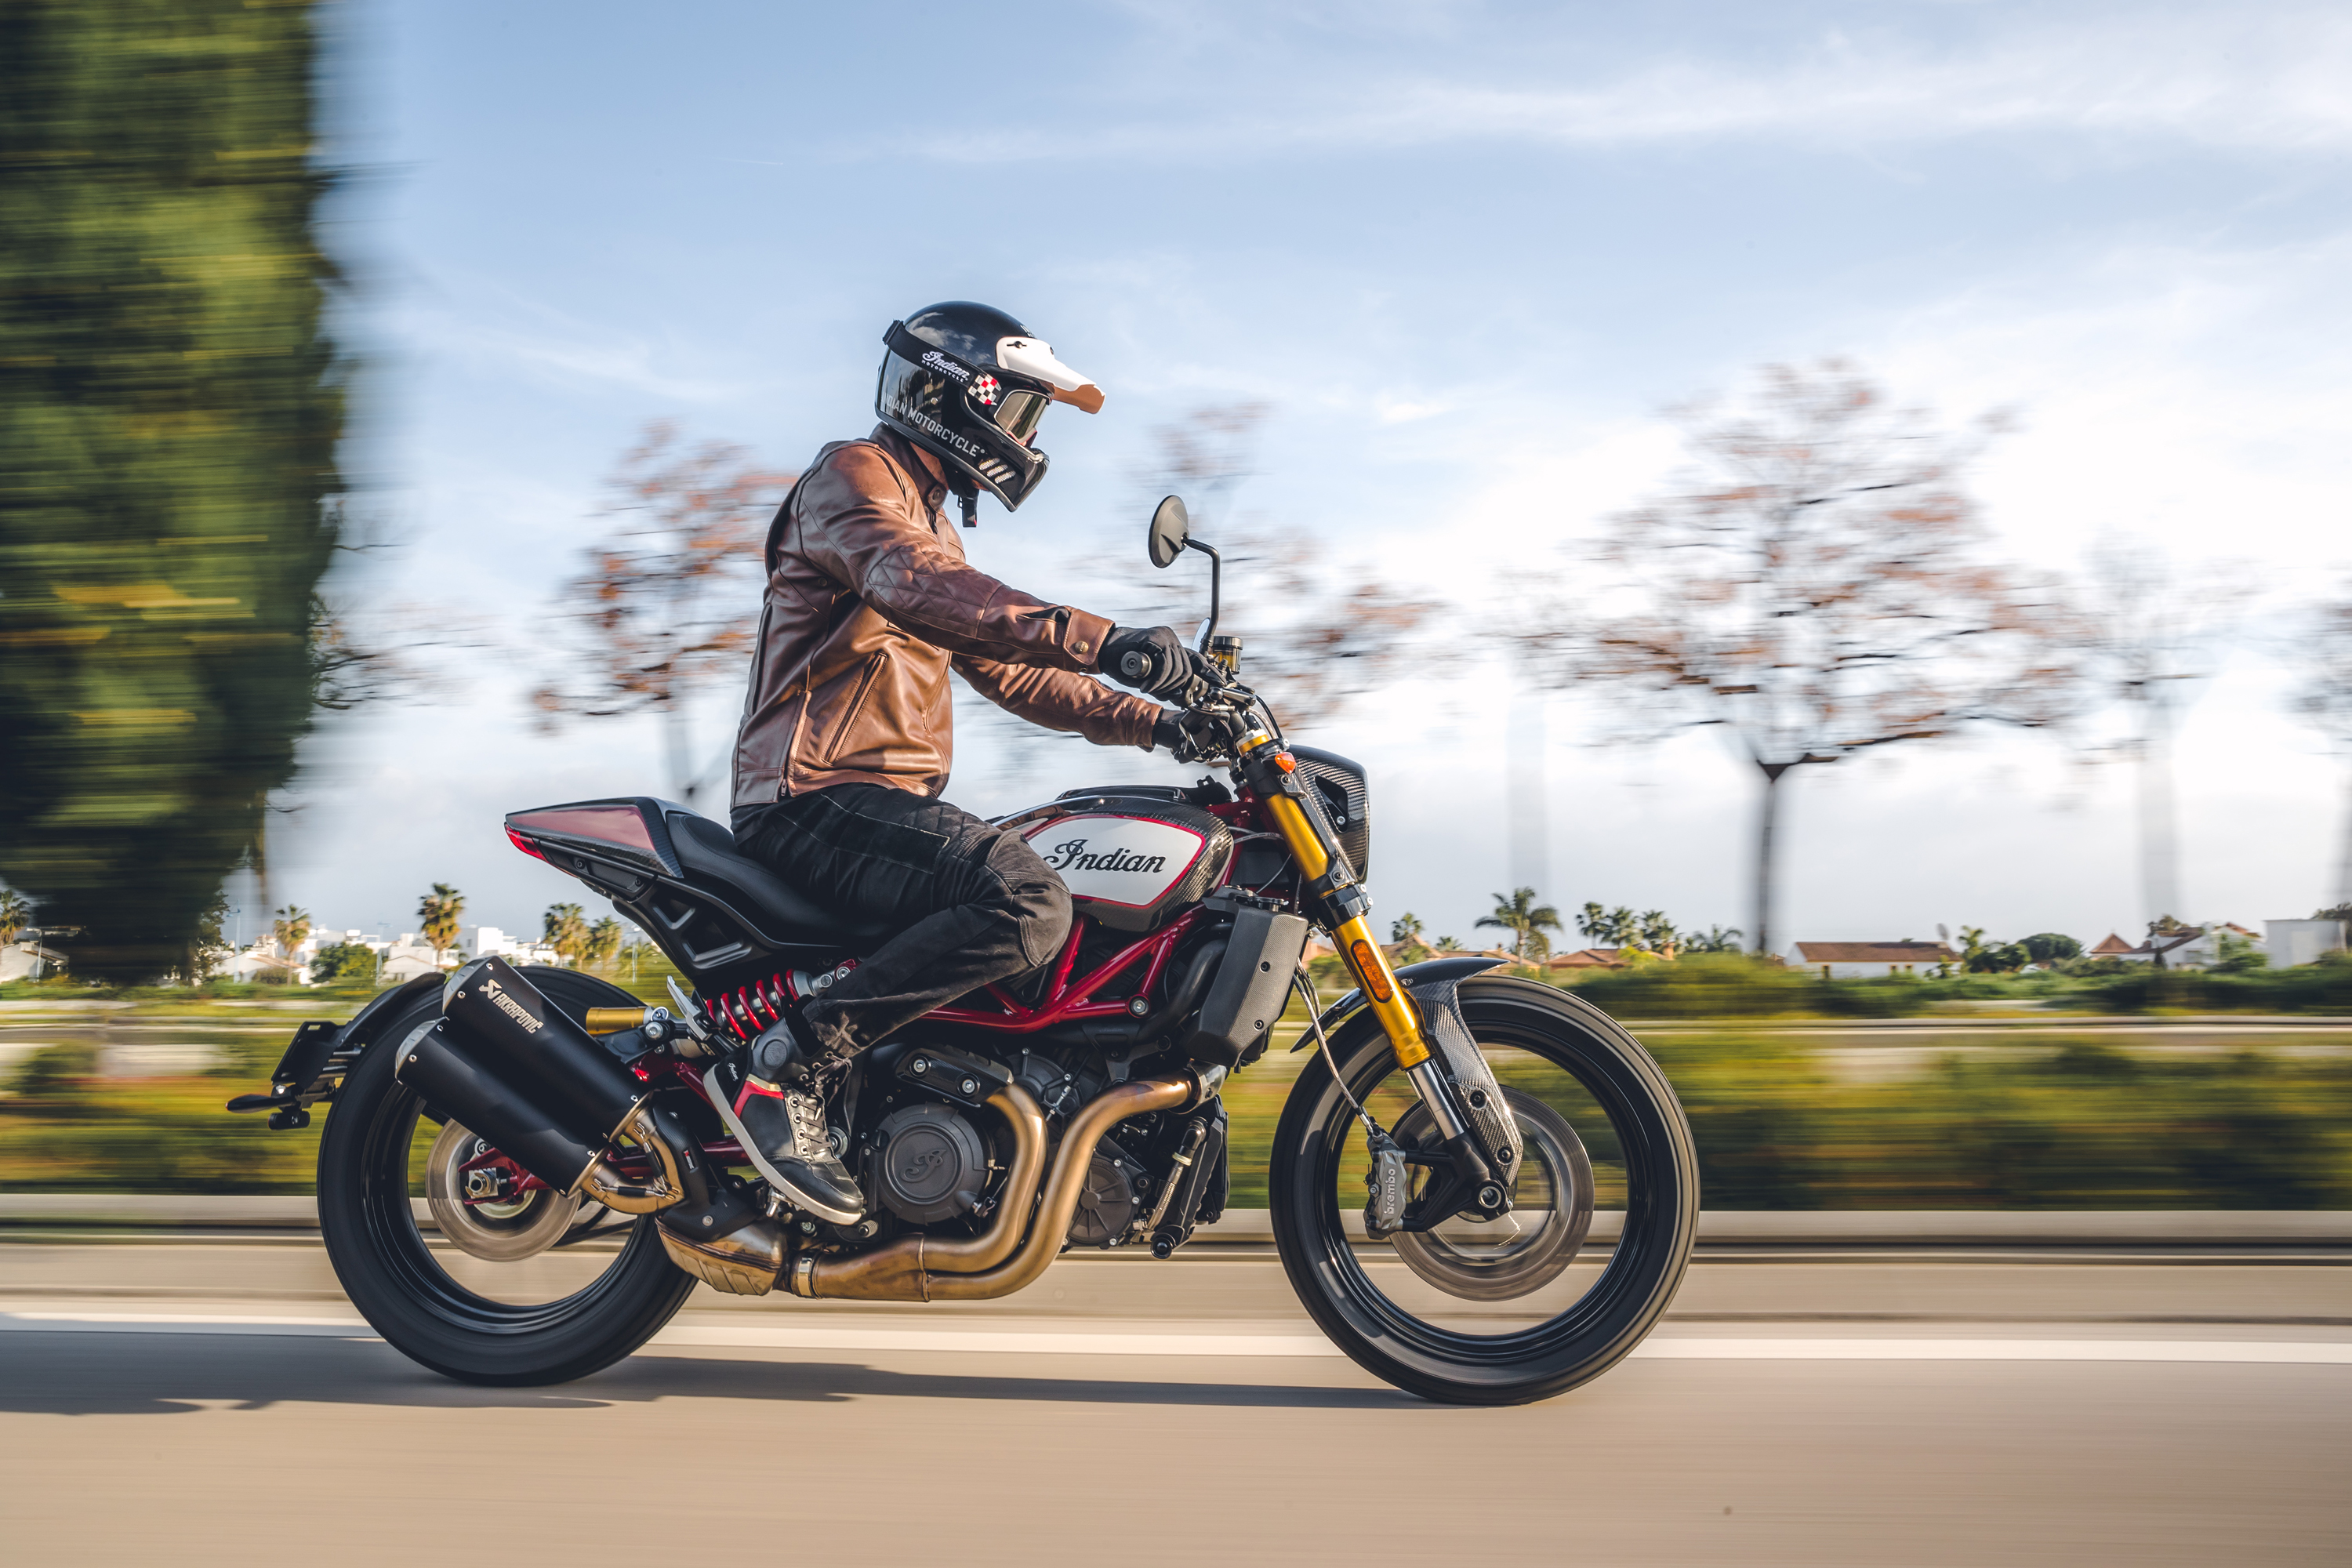 981185 descargar imagen vehículos, ftr indio 1200, indio (motocicleta), motocicleta: fondos de pantalla y protectores de pantalla gratis